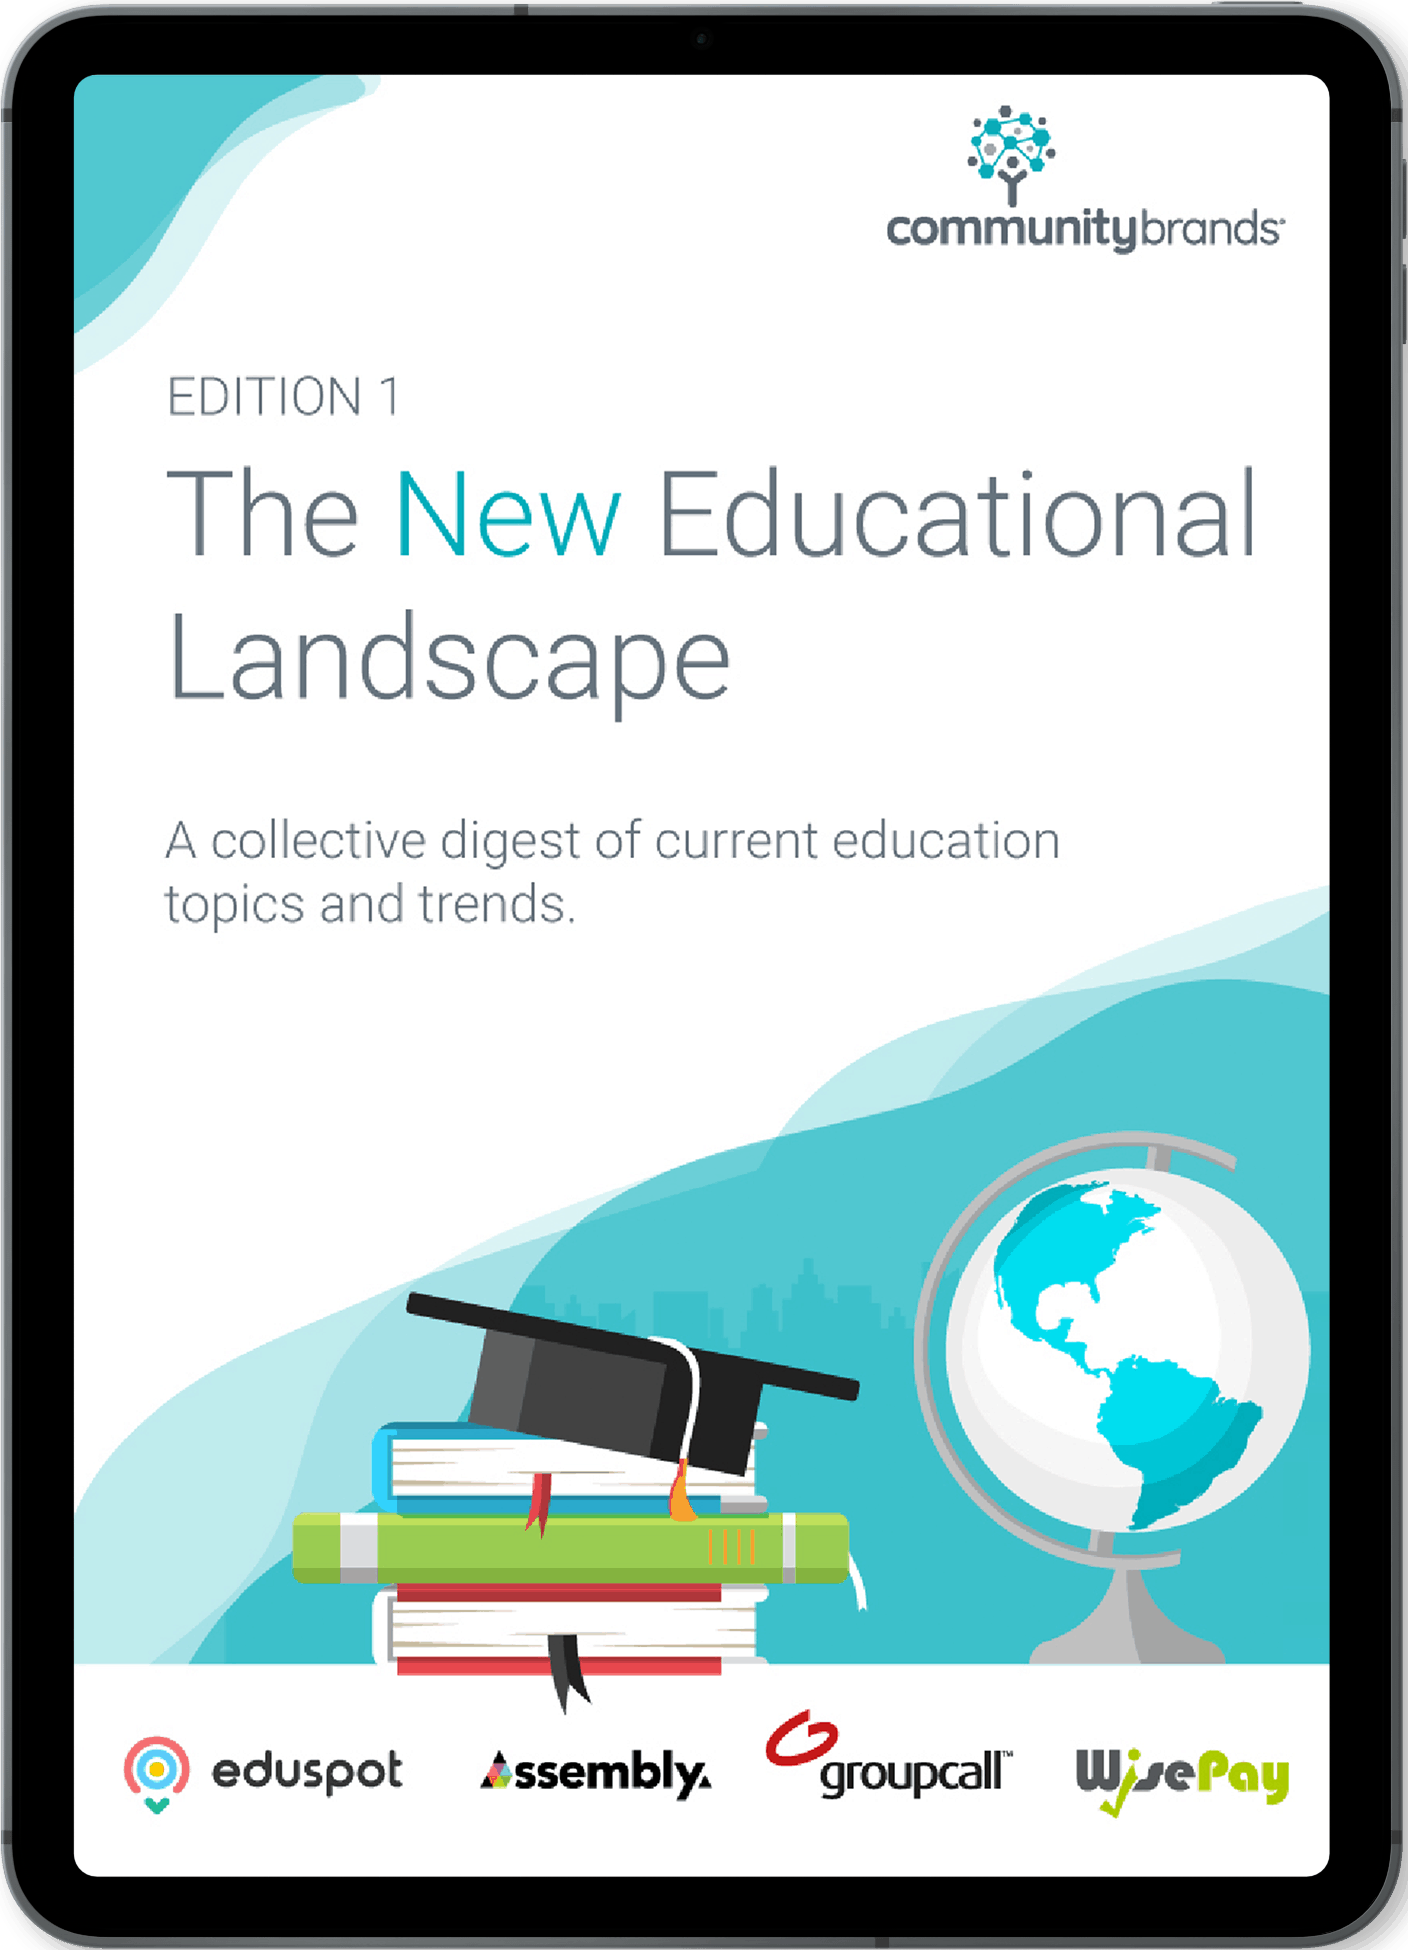 The new education landscape